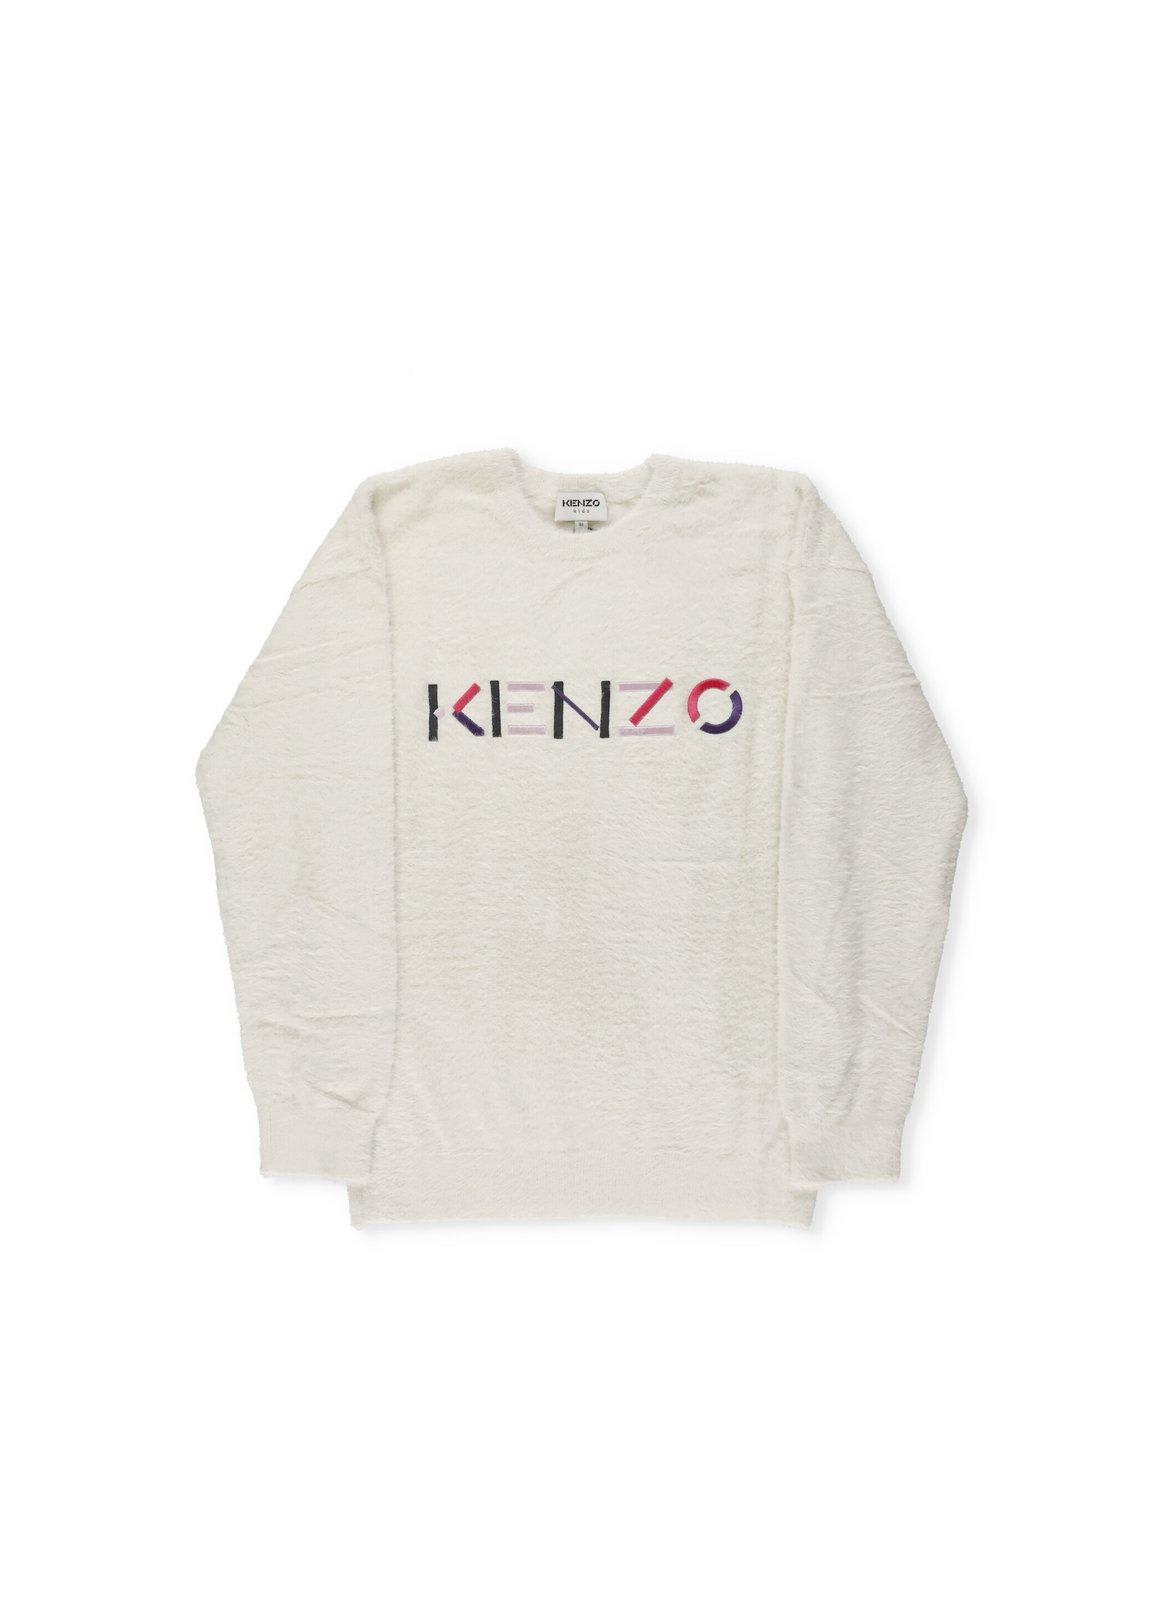 Kenzo Kids Logo Embroidered Crewneck Sweater